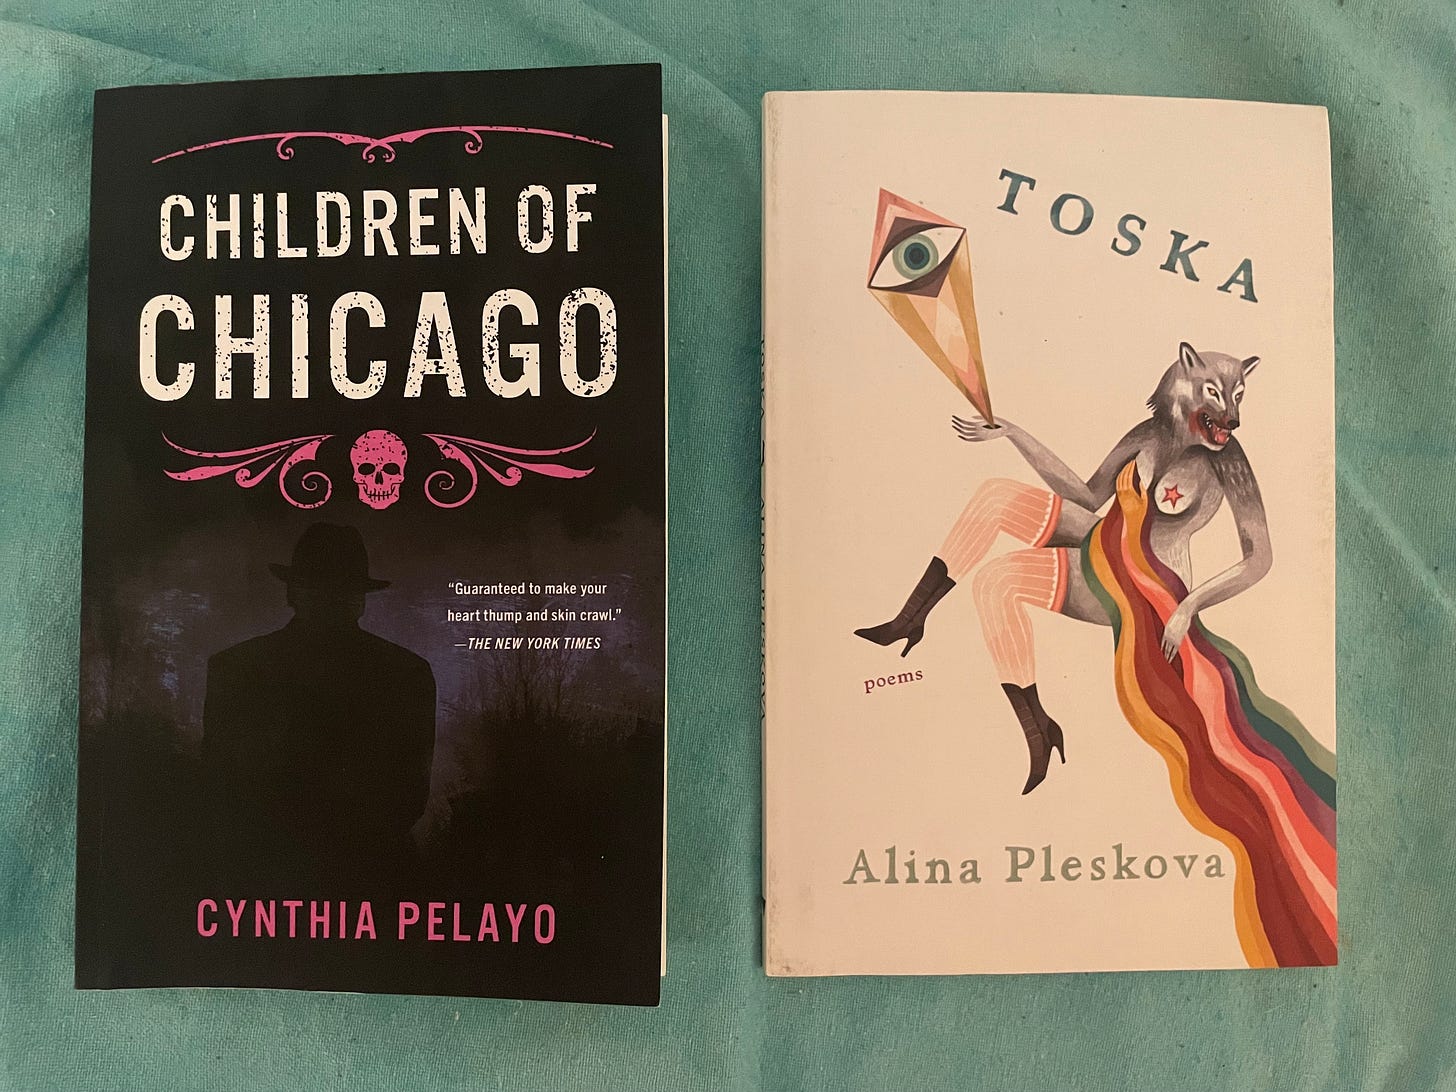 Children of Chicago by Cynthia Pelayo and Toska by Alina Pleskova